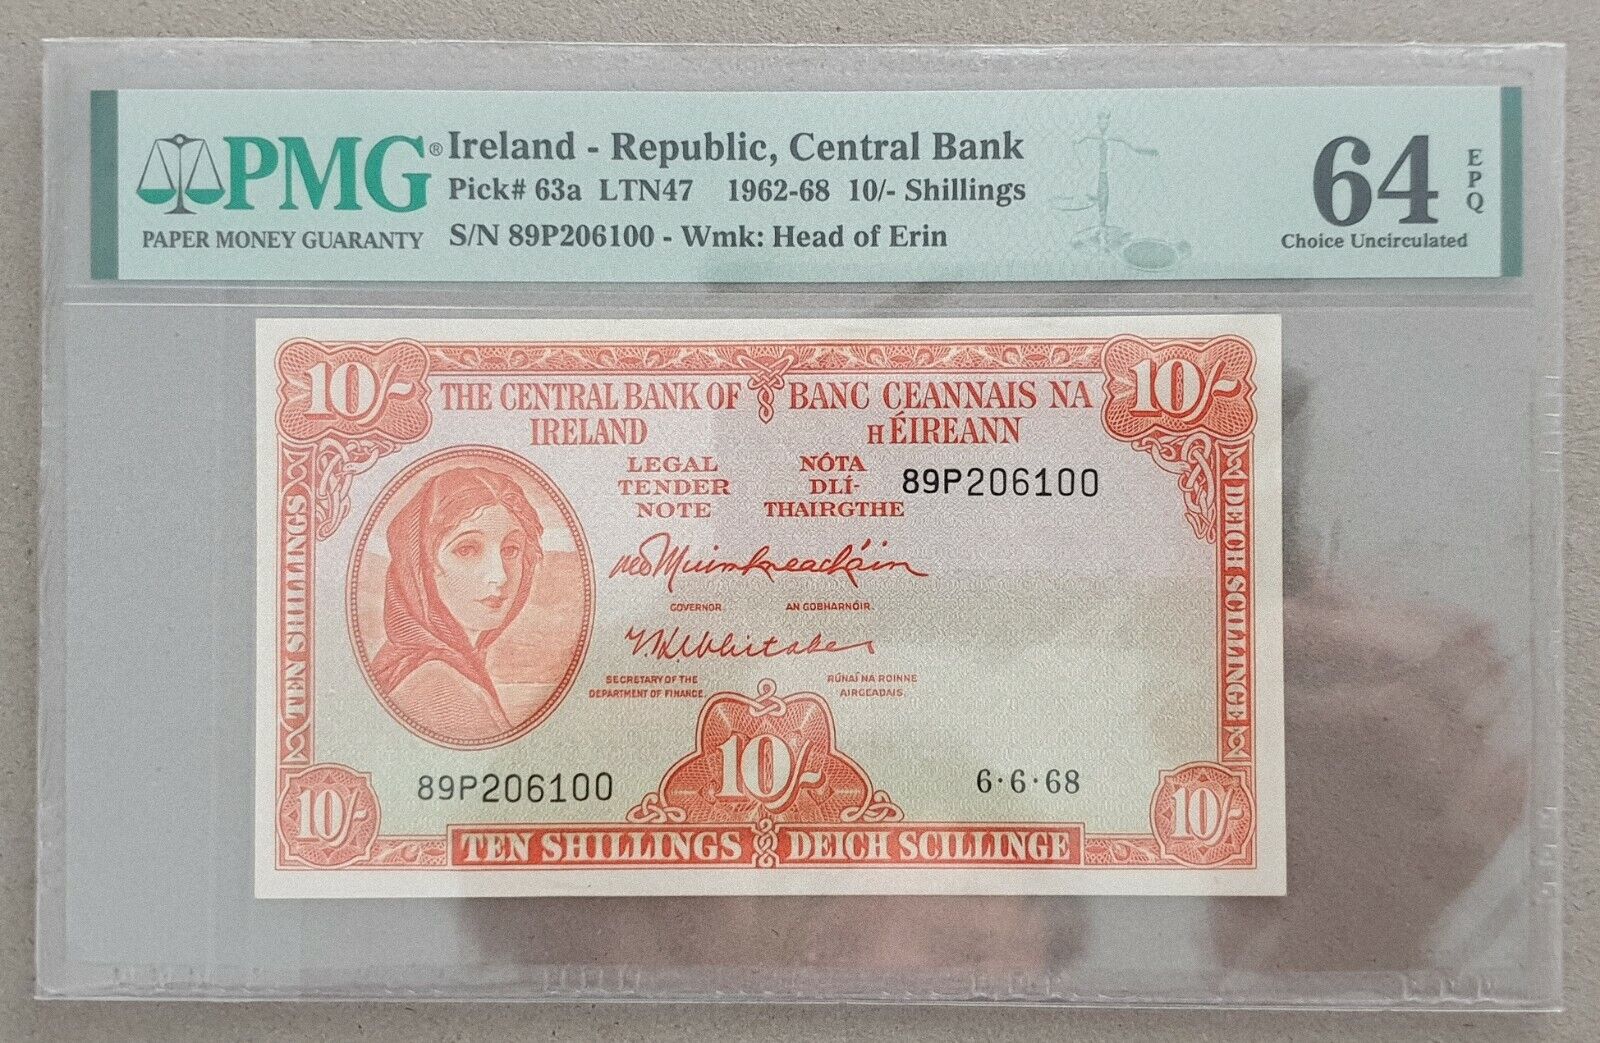 IRELAND 1962~68 10 Shilling P 63 a UNC PMG 64 EPQ